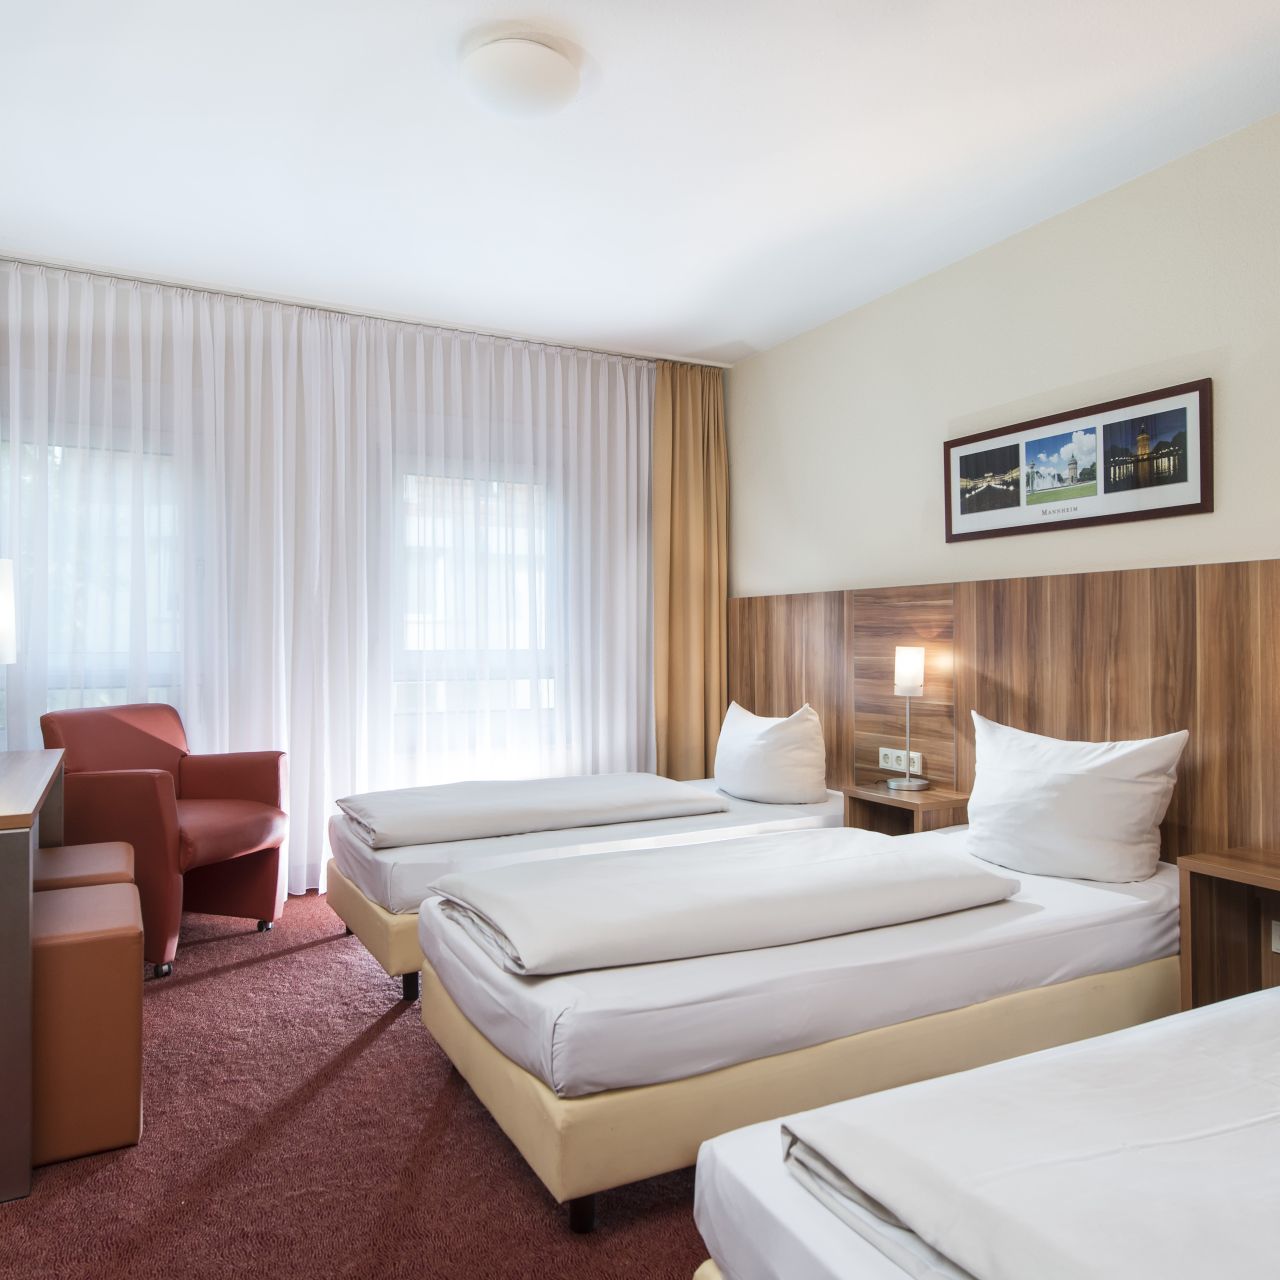 Best Western Hotel Mannheim City - Great prices at HOTEL INFO